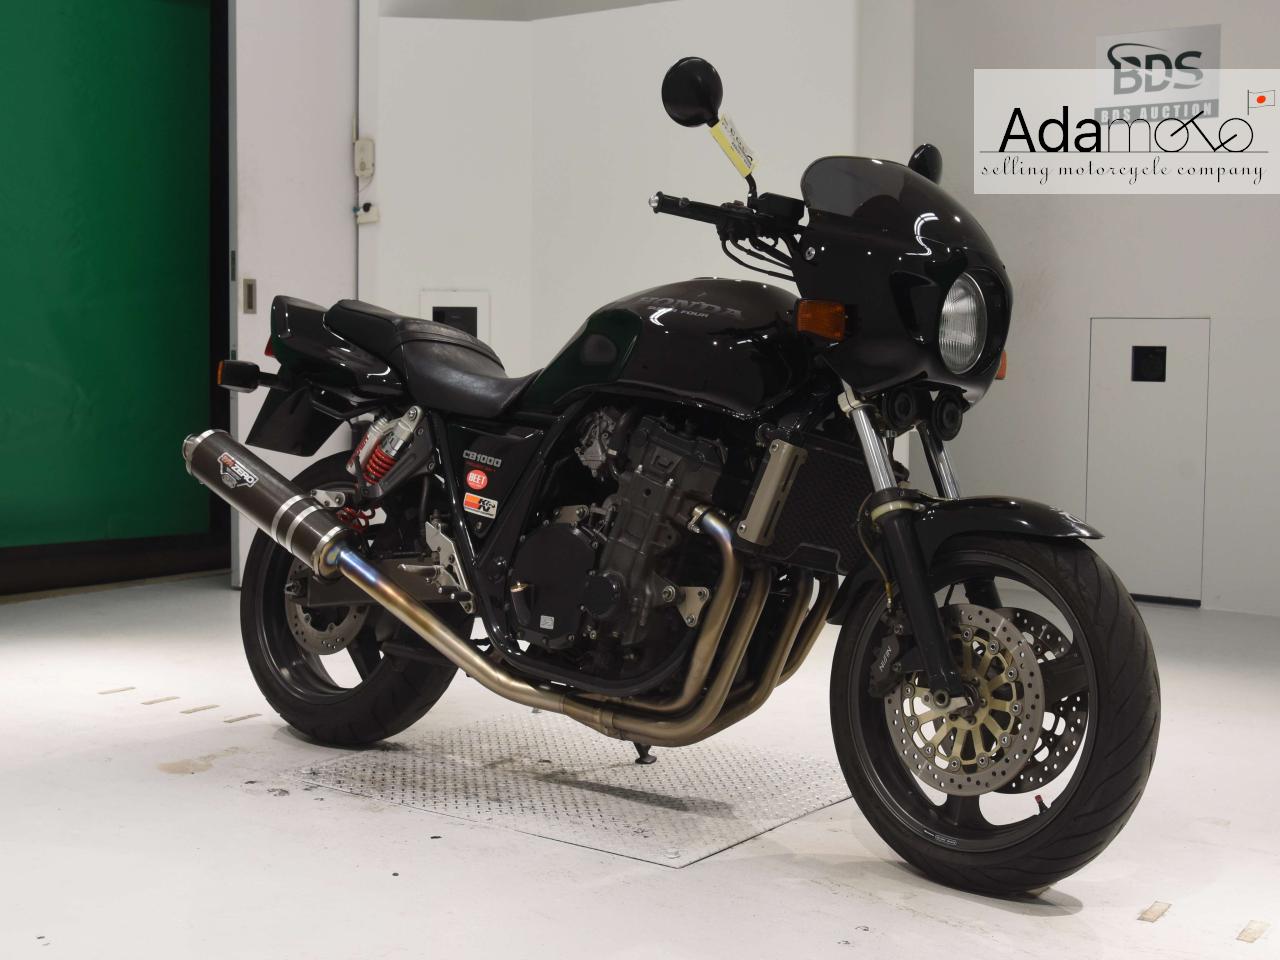 Honda CB1000SF T2 - Adamoto - Motorcycles from Japan